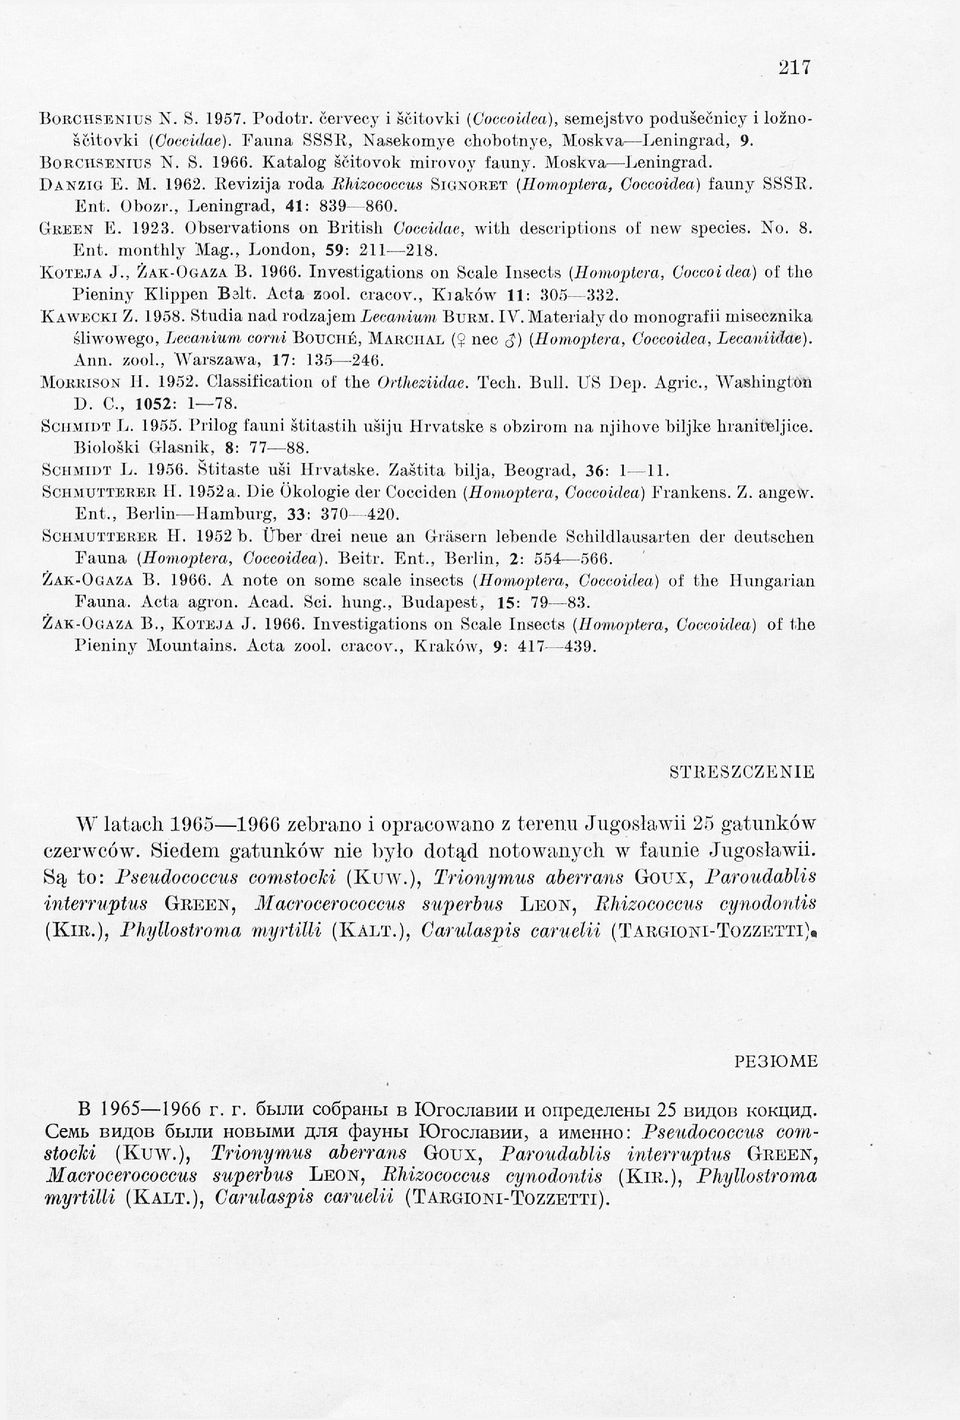 Obozr., Leningrad, 41: 839 860. E. 1923. Observations on B ritish C occidae, with descriptions of new species. No. 8. E n t. monthly Mag., London, 59: 211-218. K o t e j a J., Ż a k -O g a z a B.